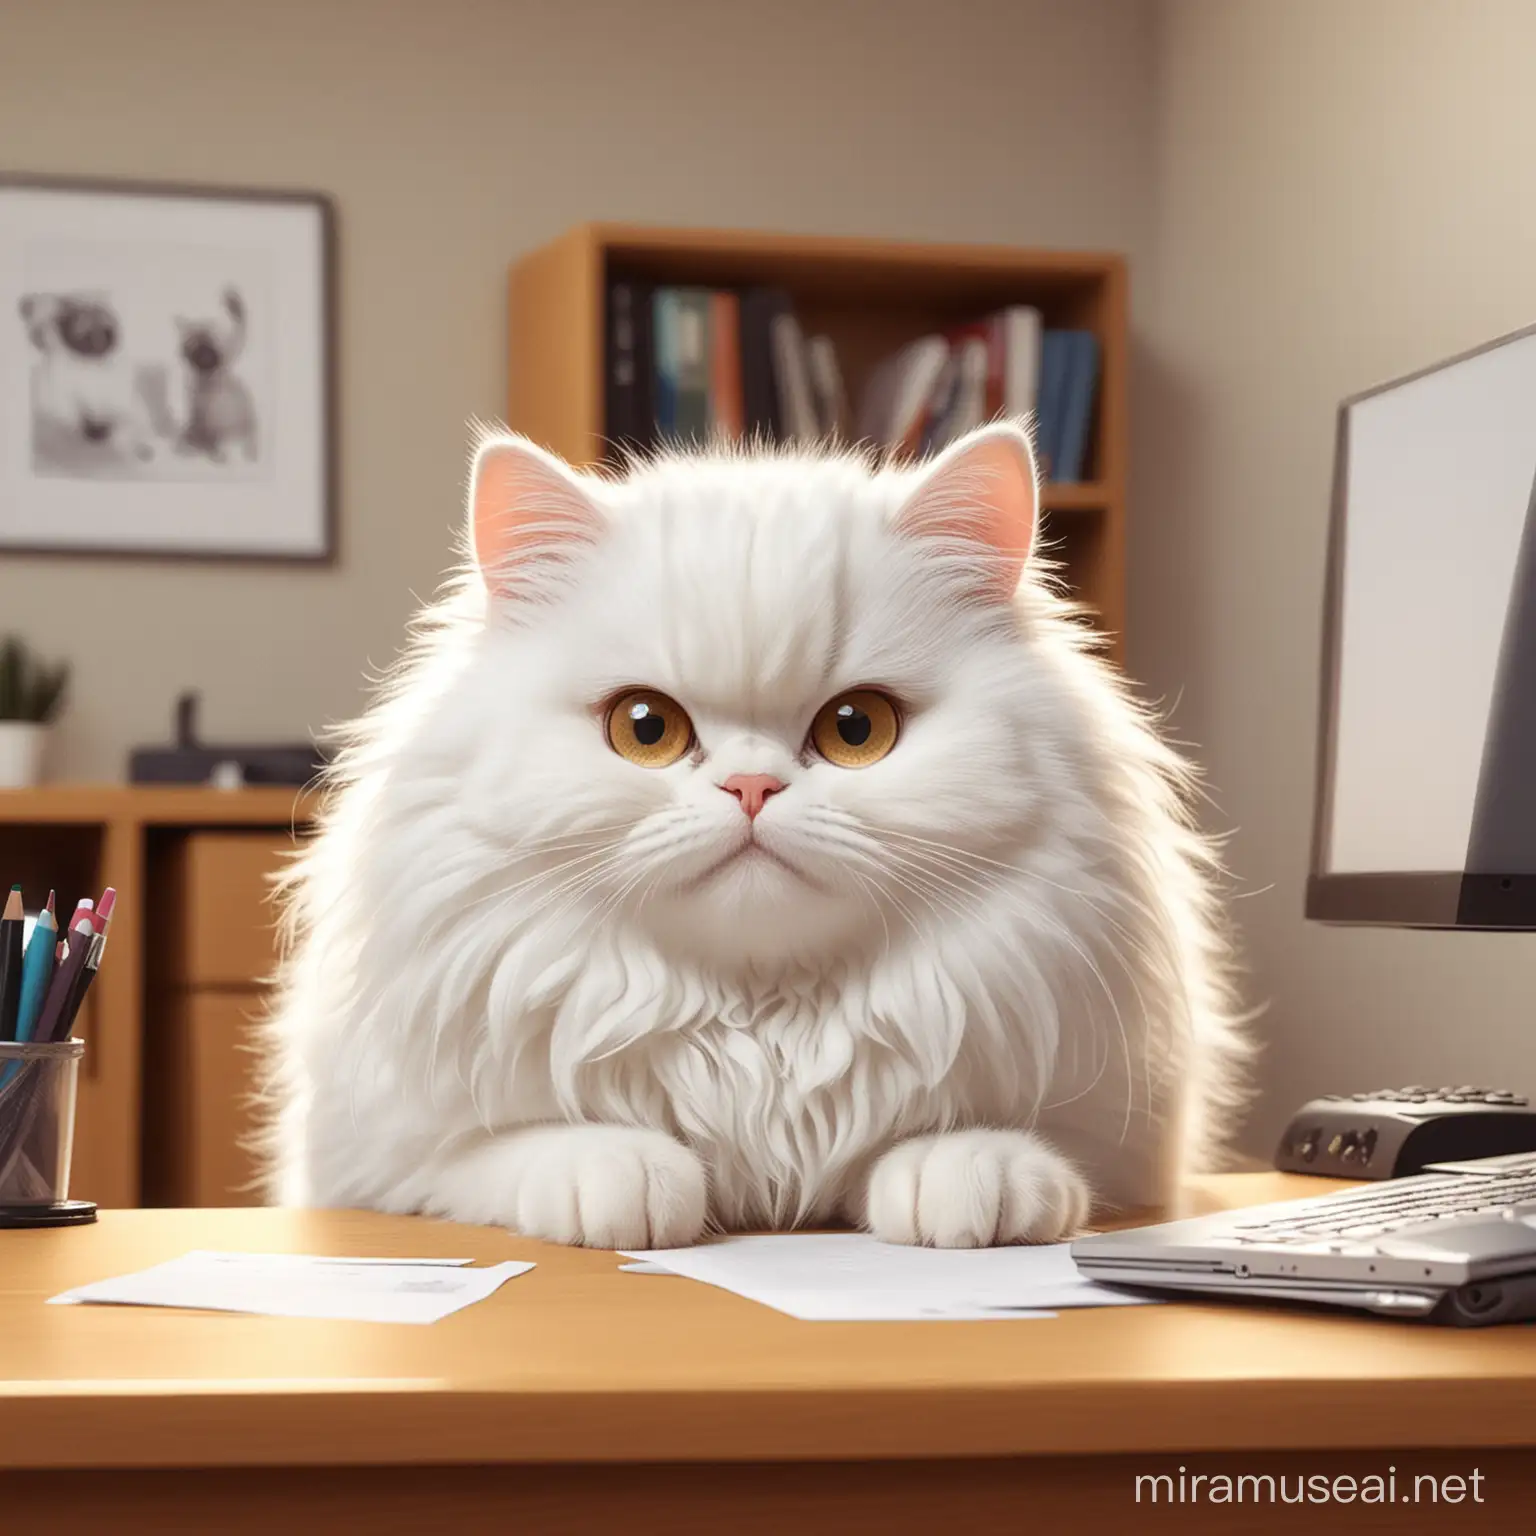 Fluffy White Cartoon Cat Playfully Peeping Over Desk